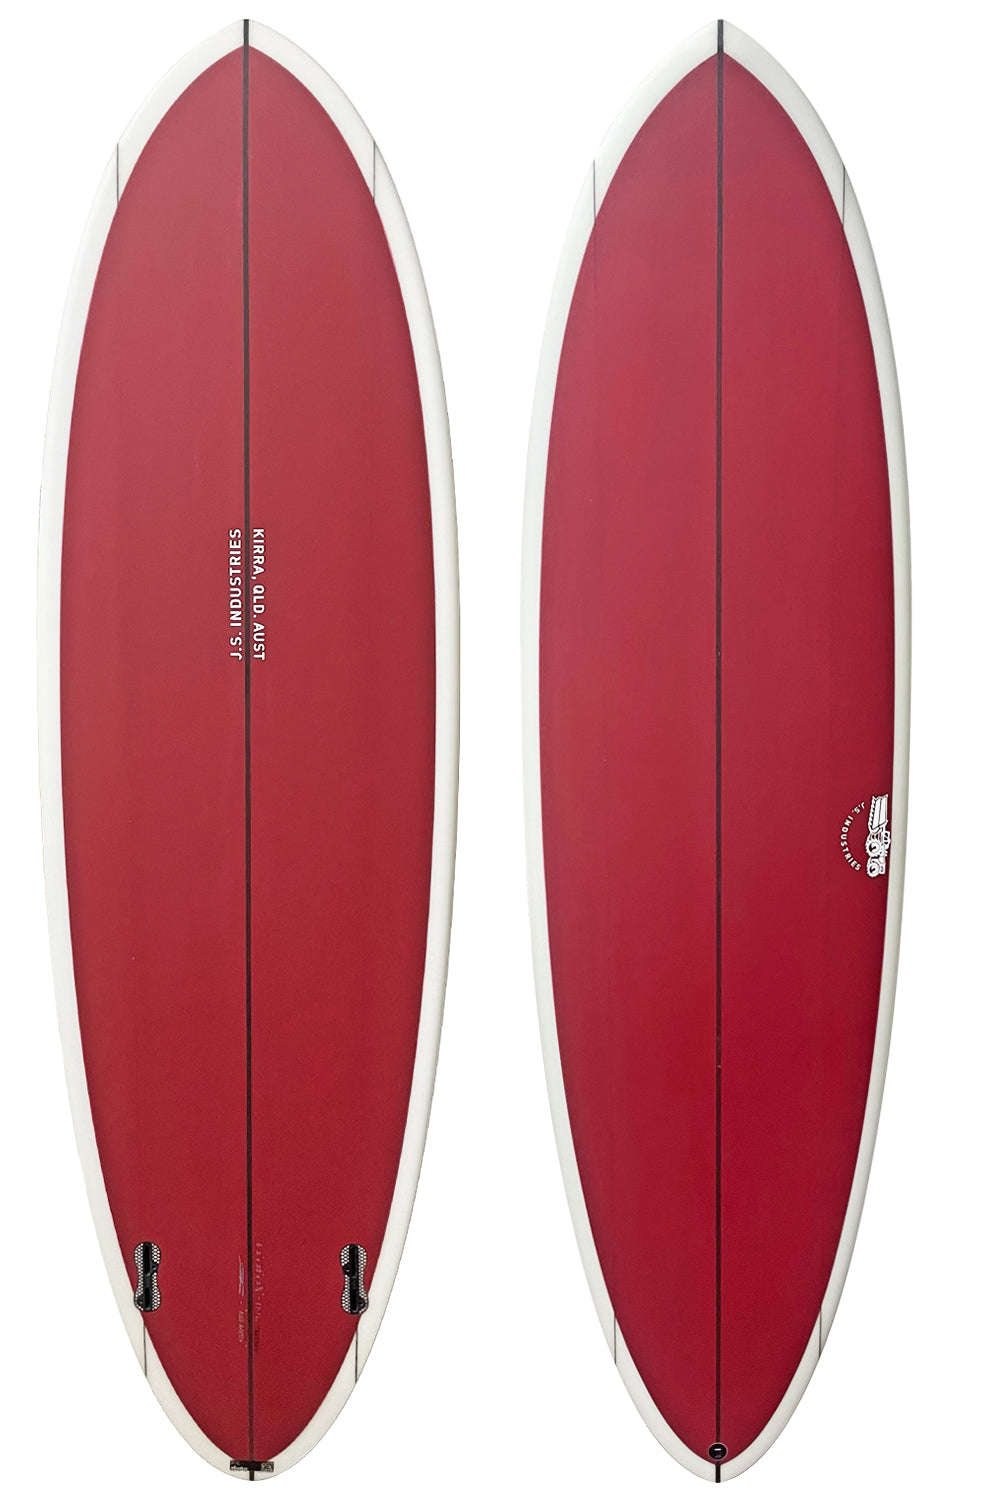 JS Industries Big Baron PE Surfboard - Coloured